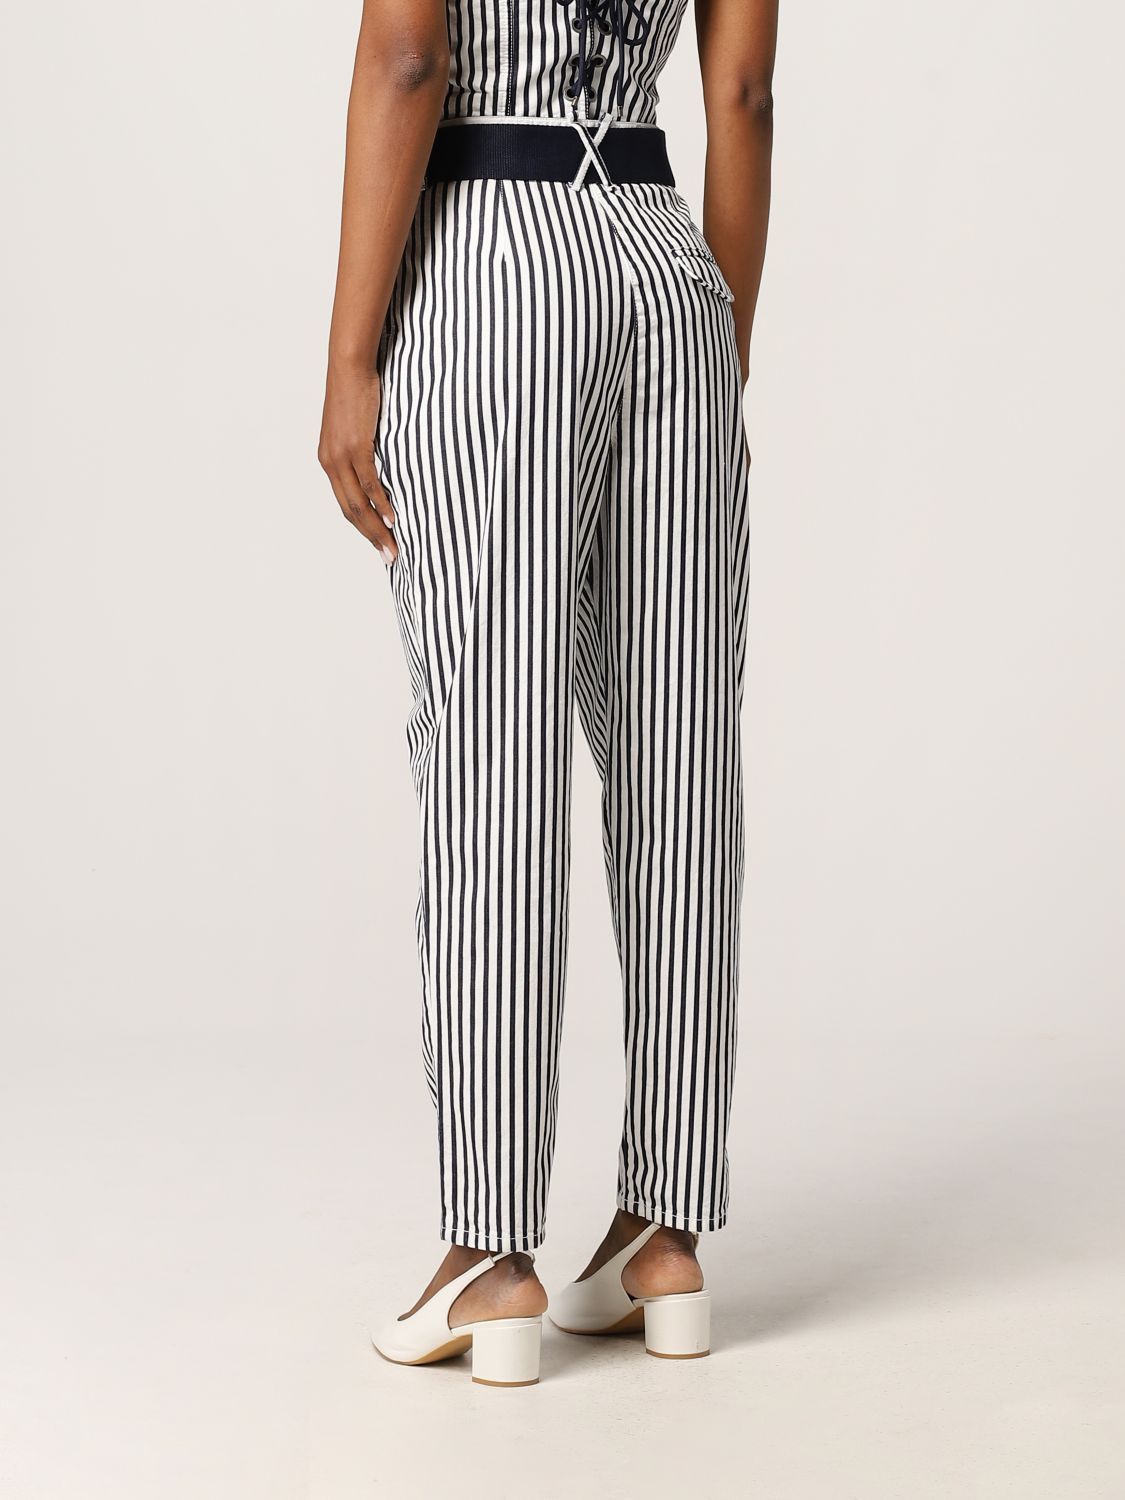 Pinko pants with striped print